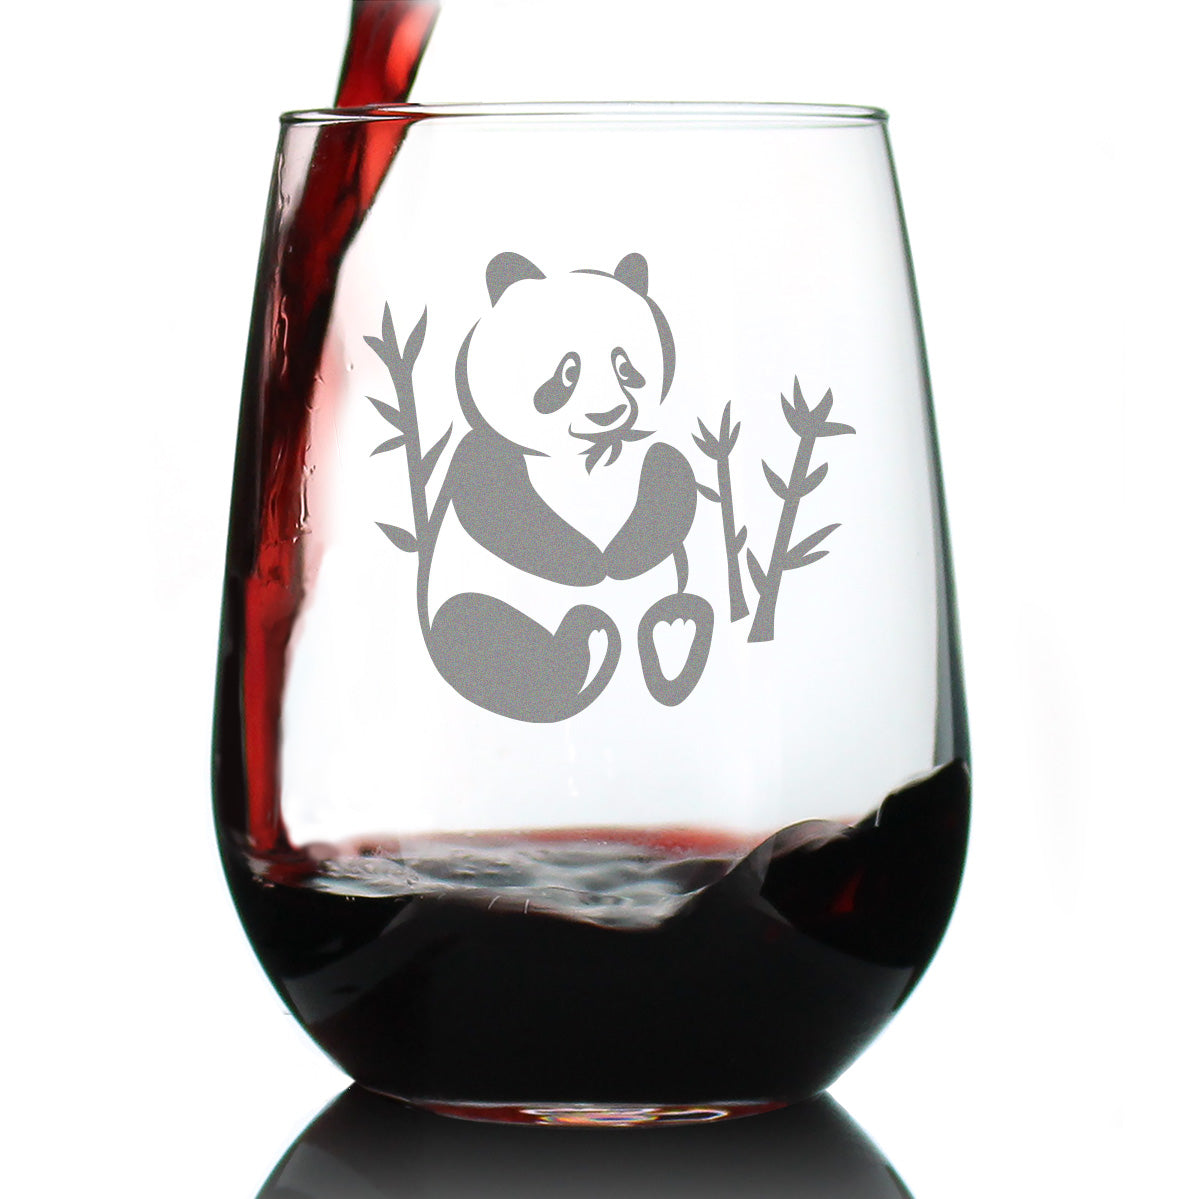 Panda Stemless Wine Glass - Cute Panda Themed Decor and Gifts for Panda Bears - Large 17 Oz Glasses